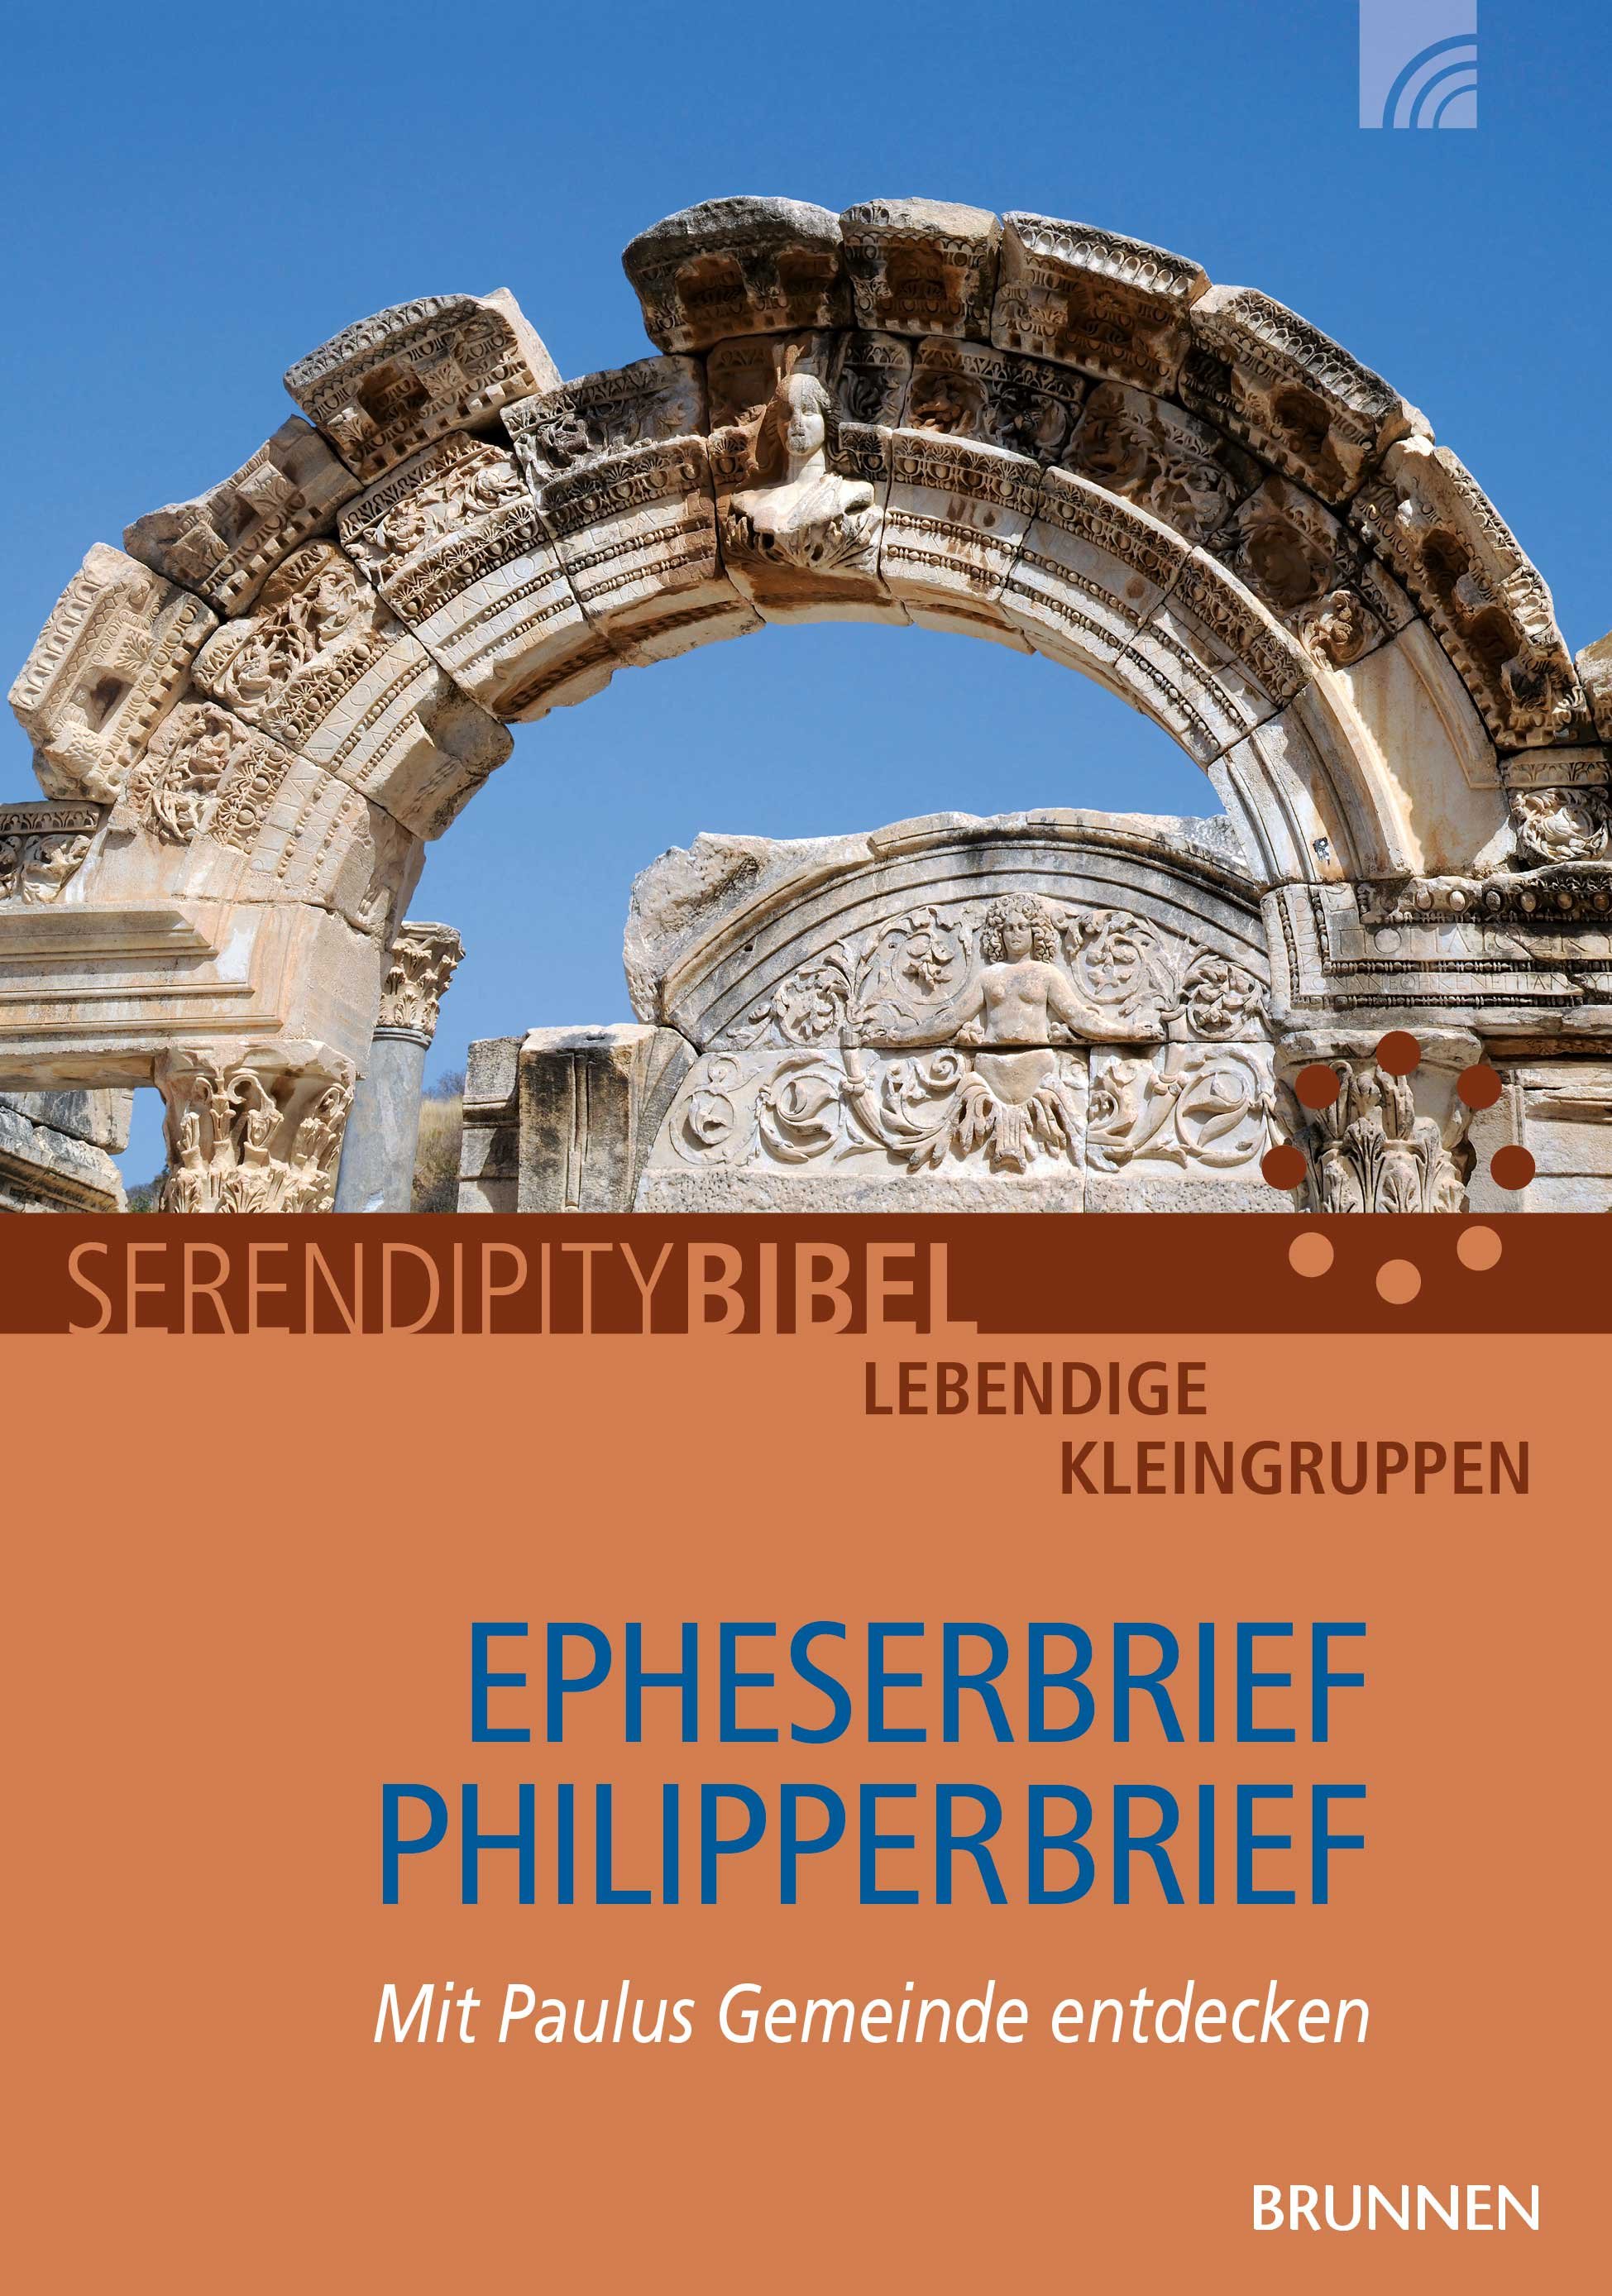 Epheser/Philipper Brief - Serendipity Bibel